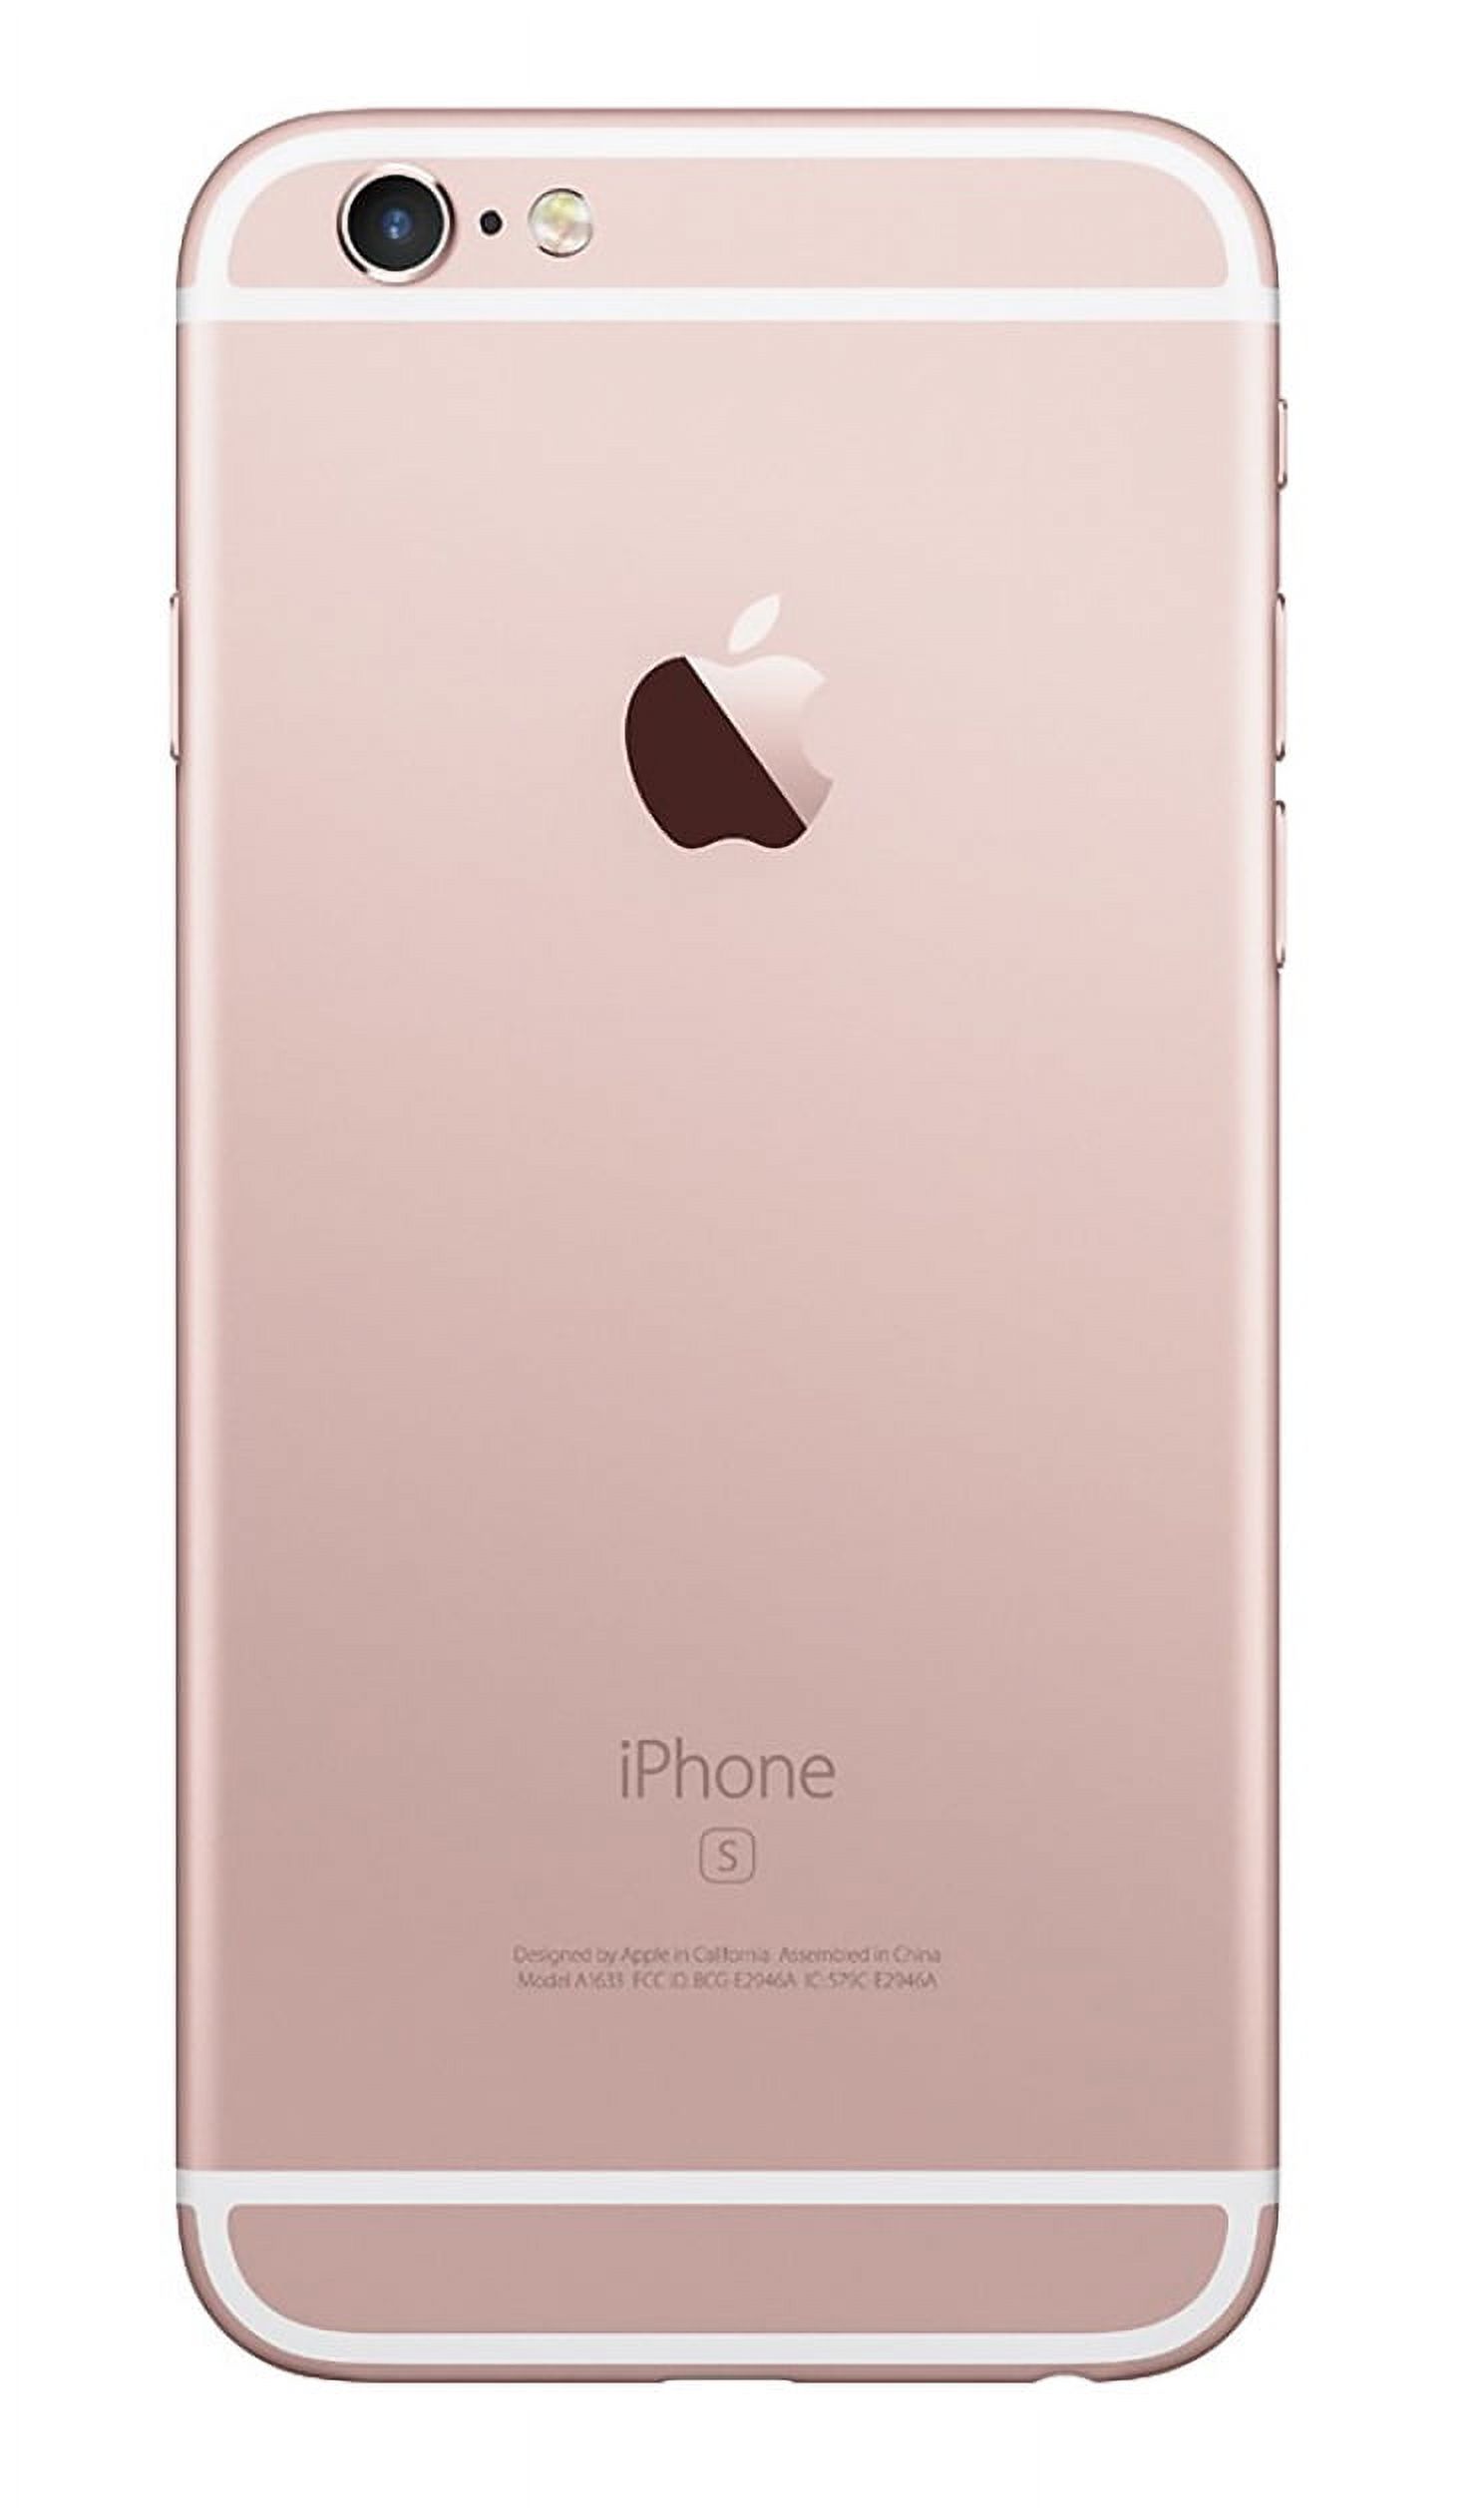 Restored Apple iPhone 6s 16GB, Rose Gold - Unlocked GSM (Refurbished) - image 3 of 3